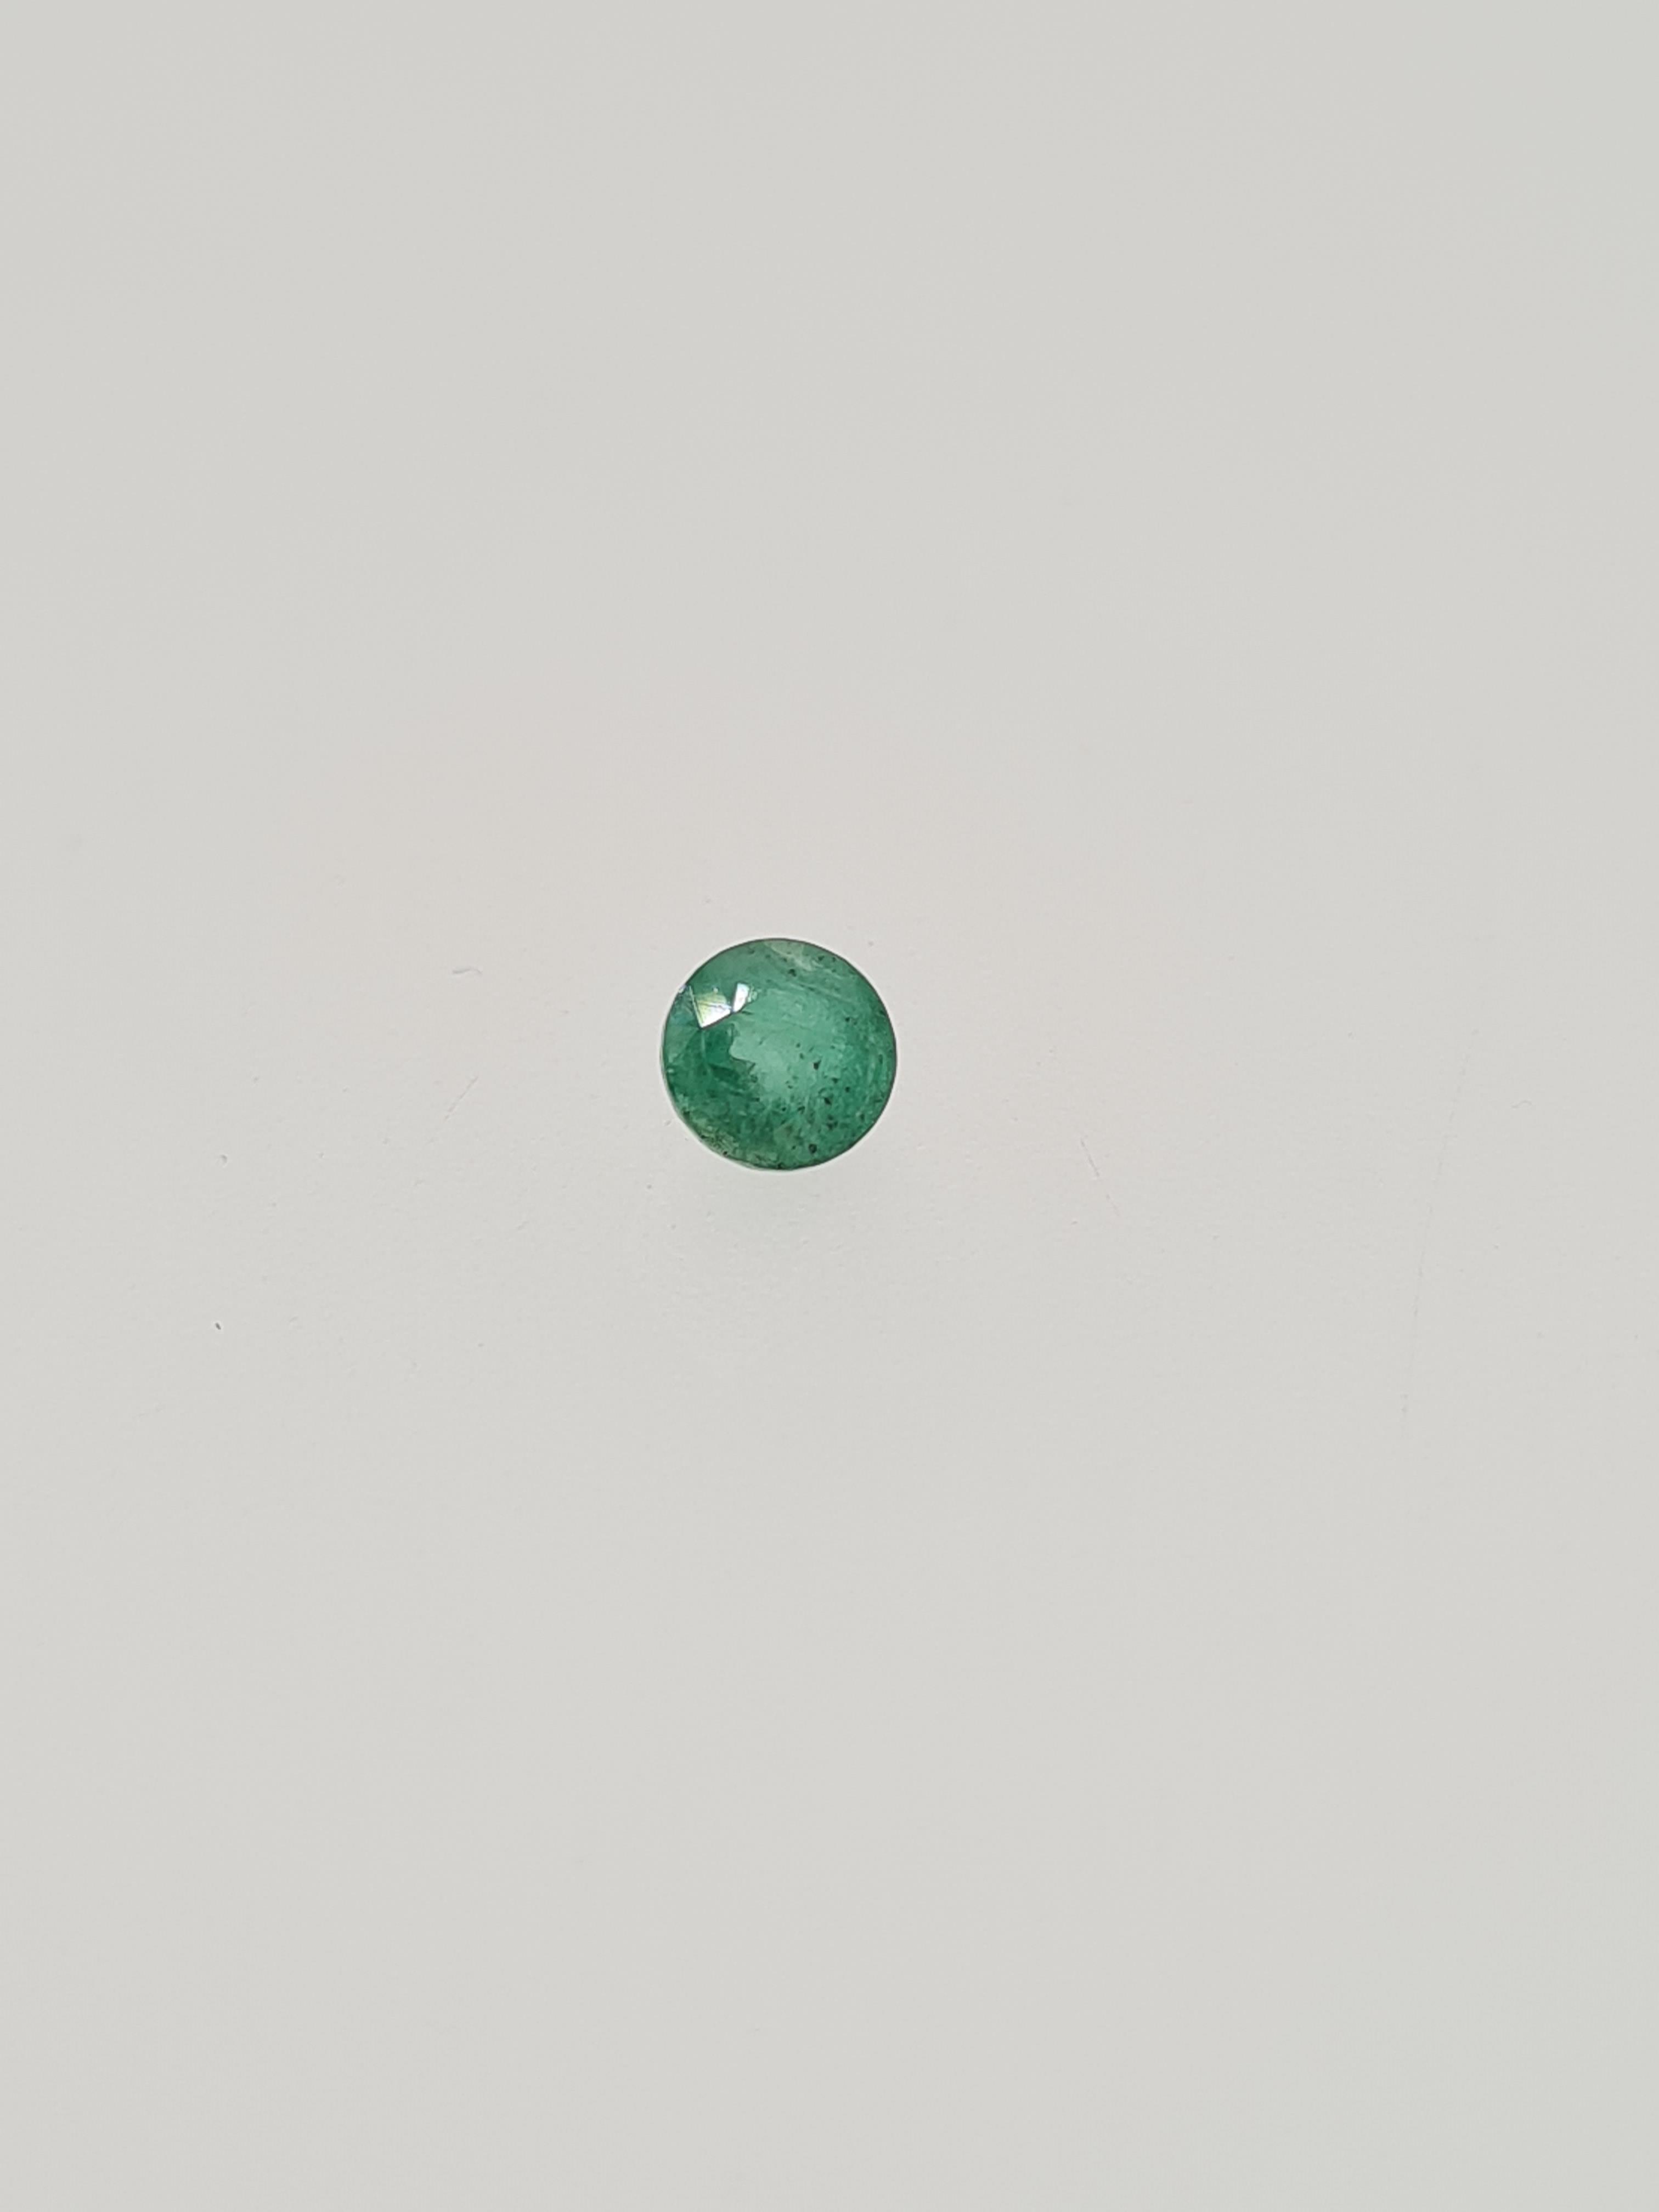 Emarald round cut gem stone - Image 2 of 4